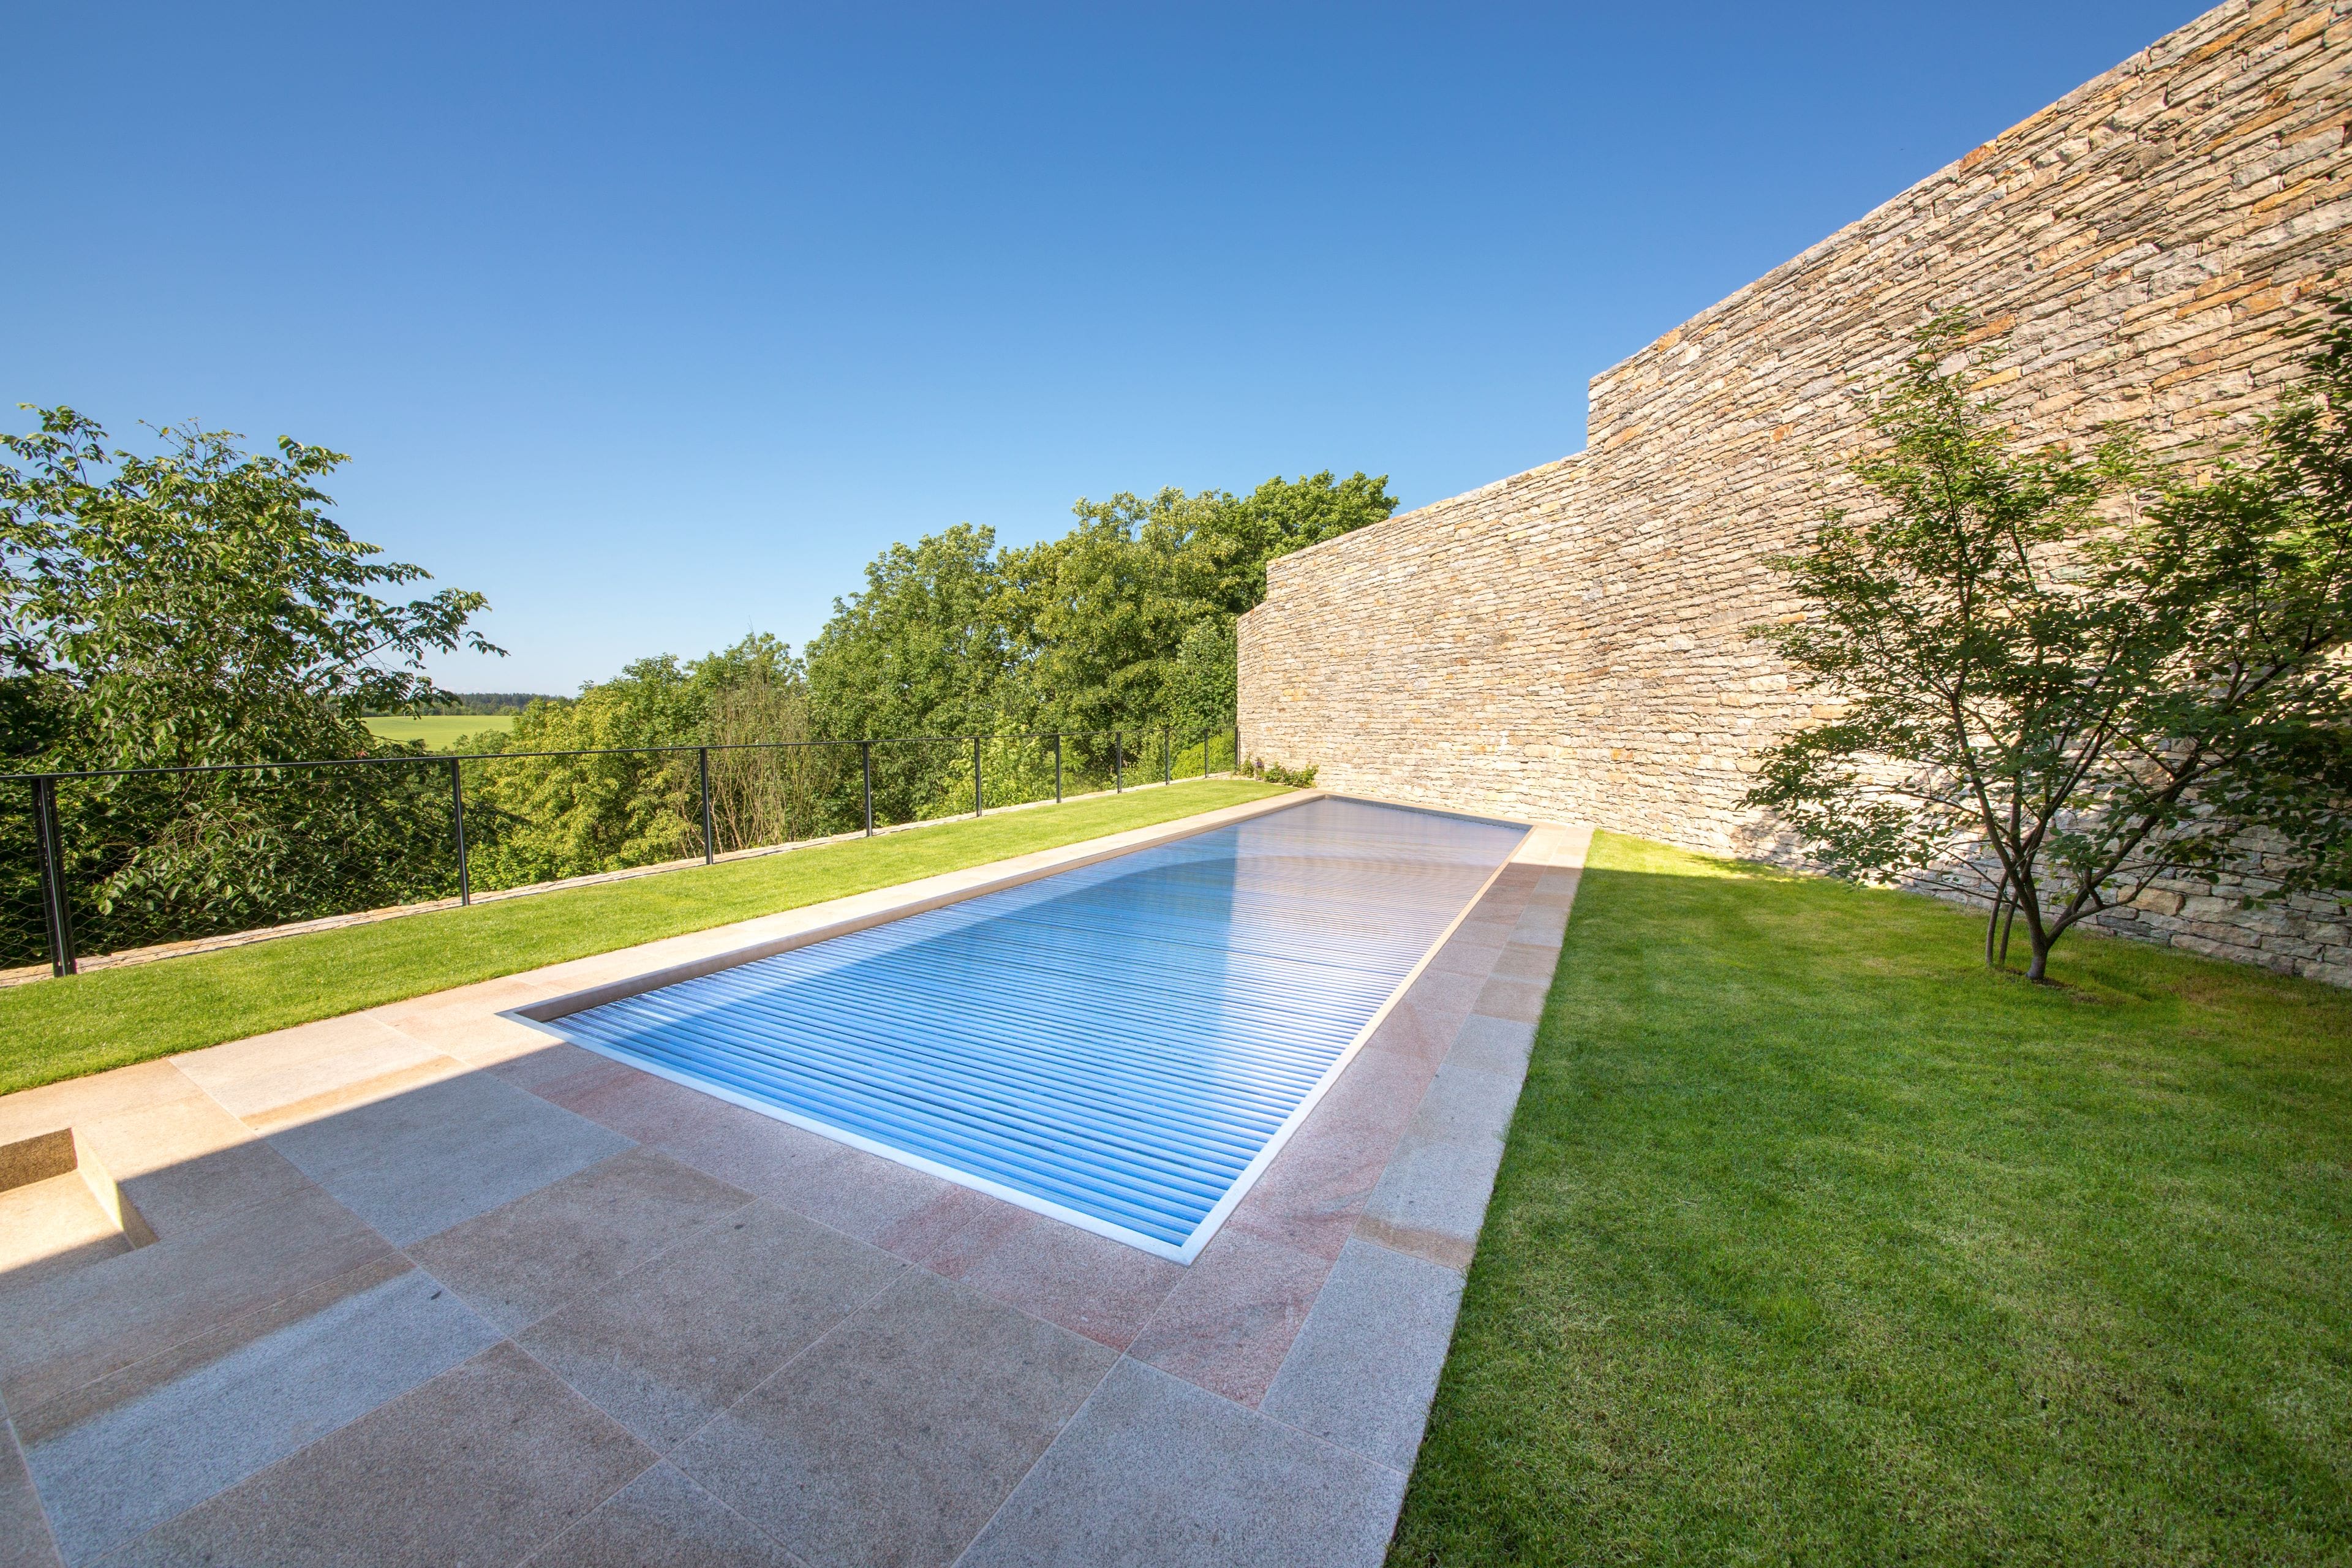 Stainless-Steel Pool in Geometric Modern Design | IMAGINOX GROUP